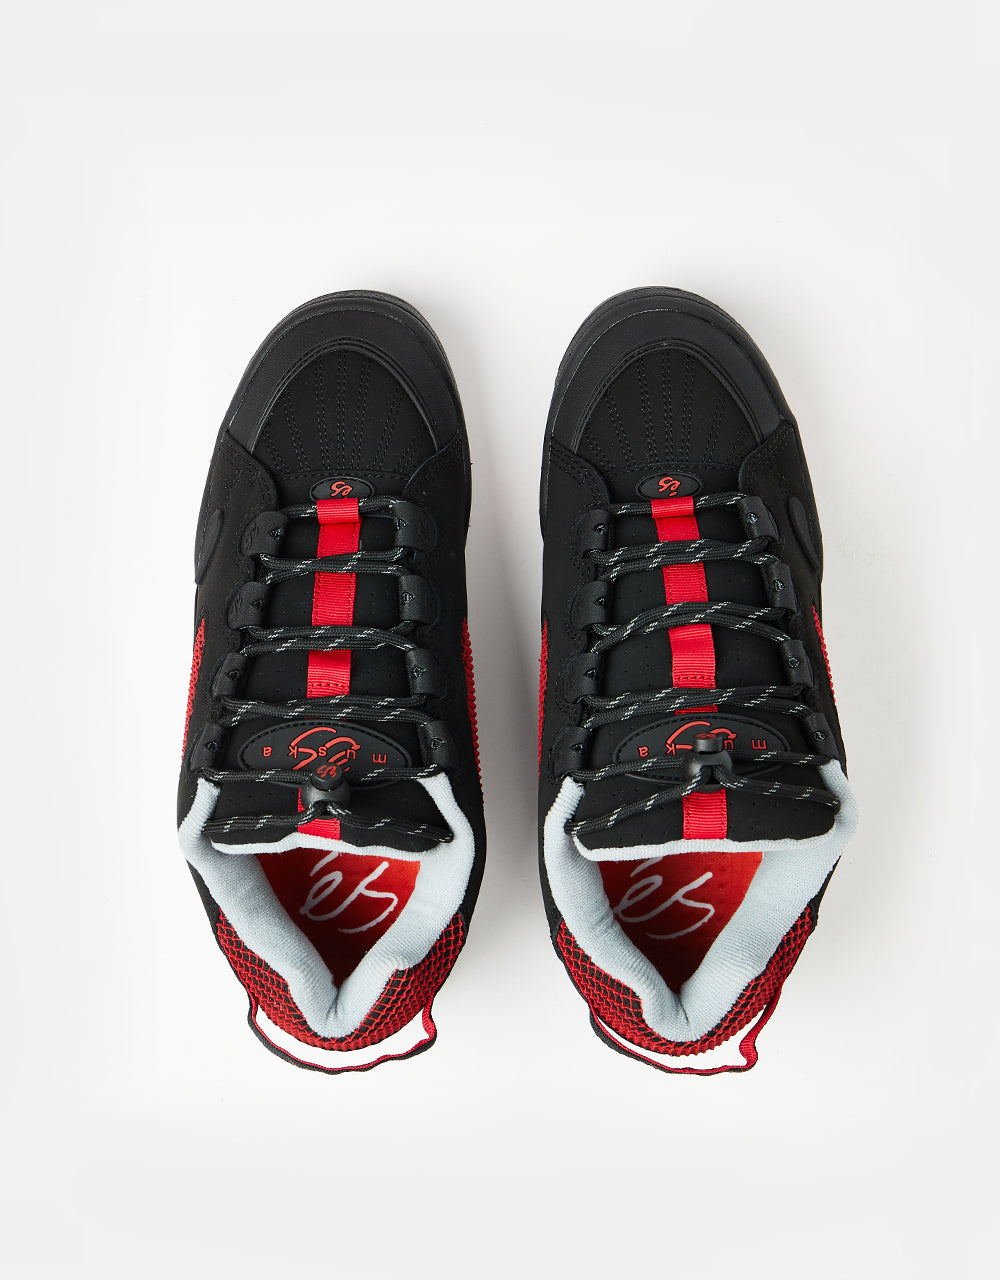 éS Muska Skate Shoes - Black/Red